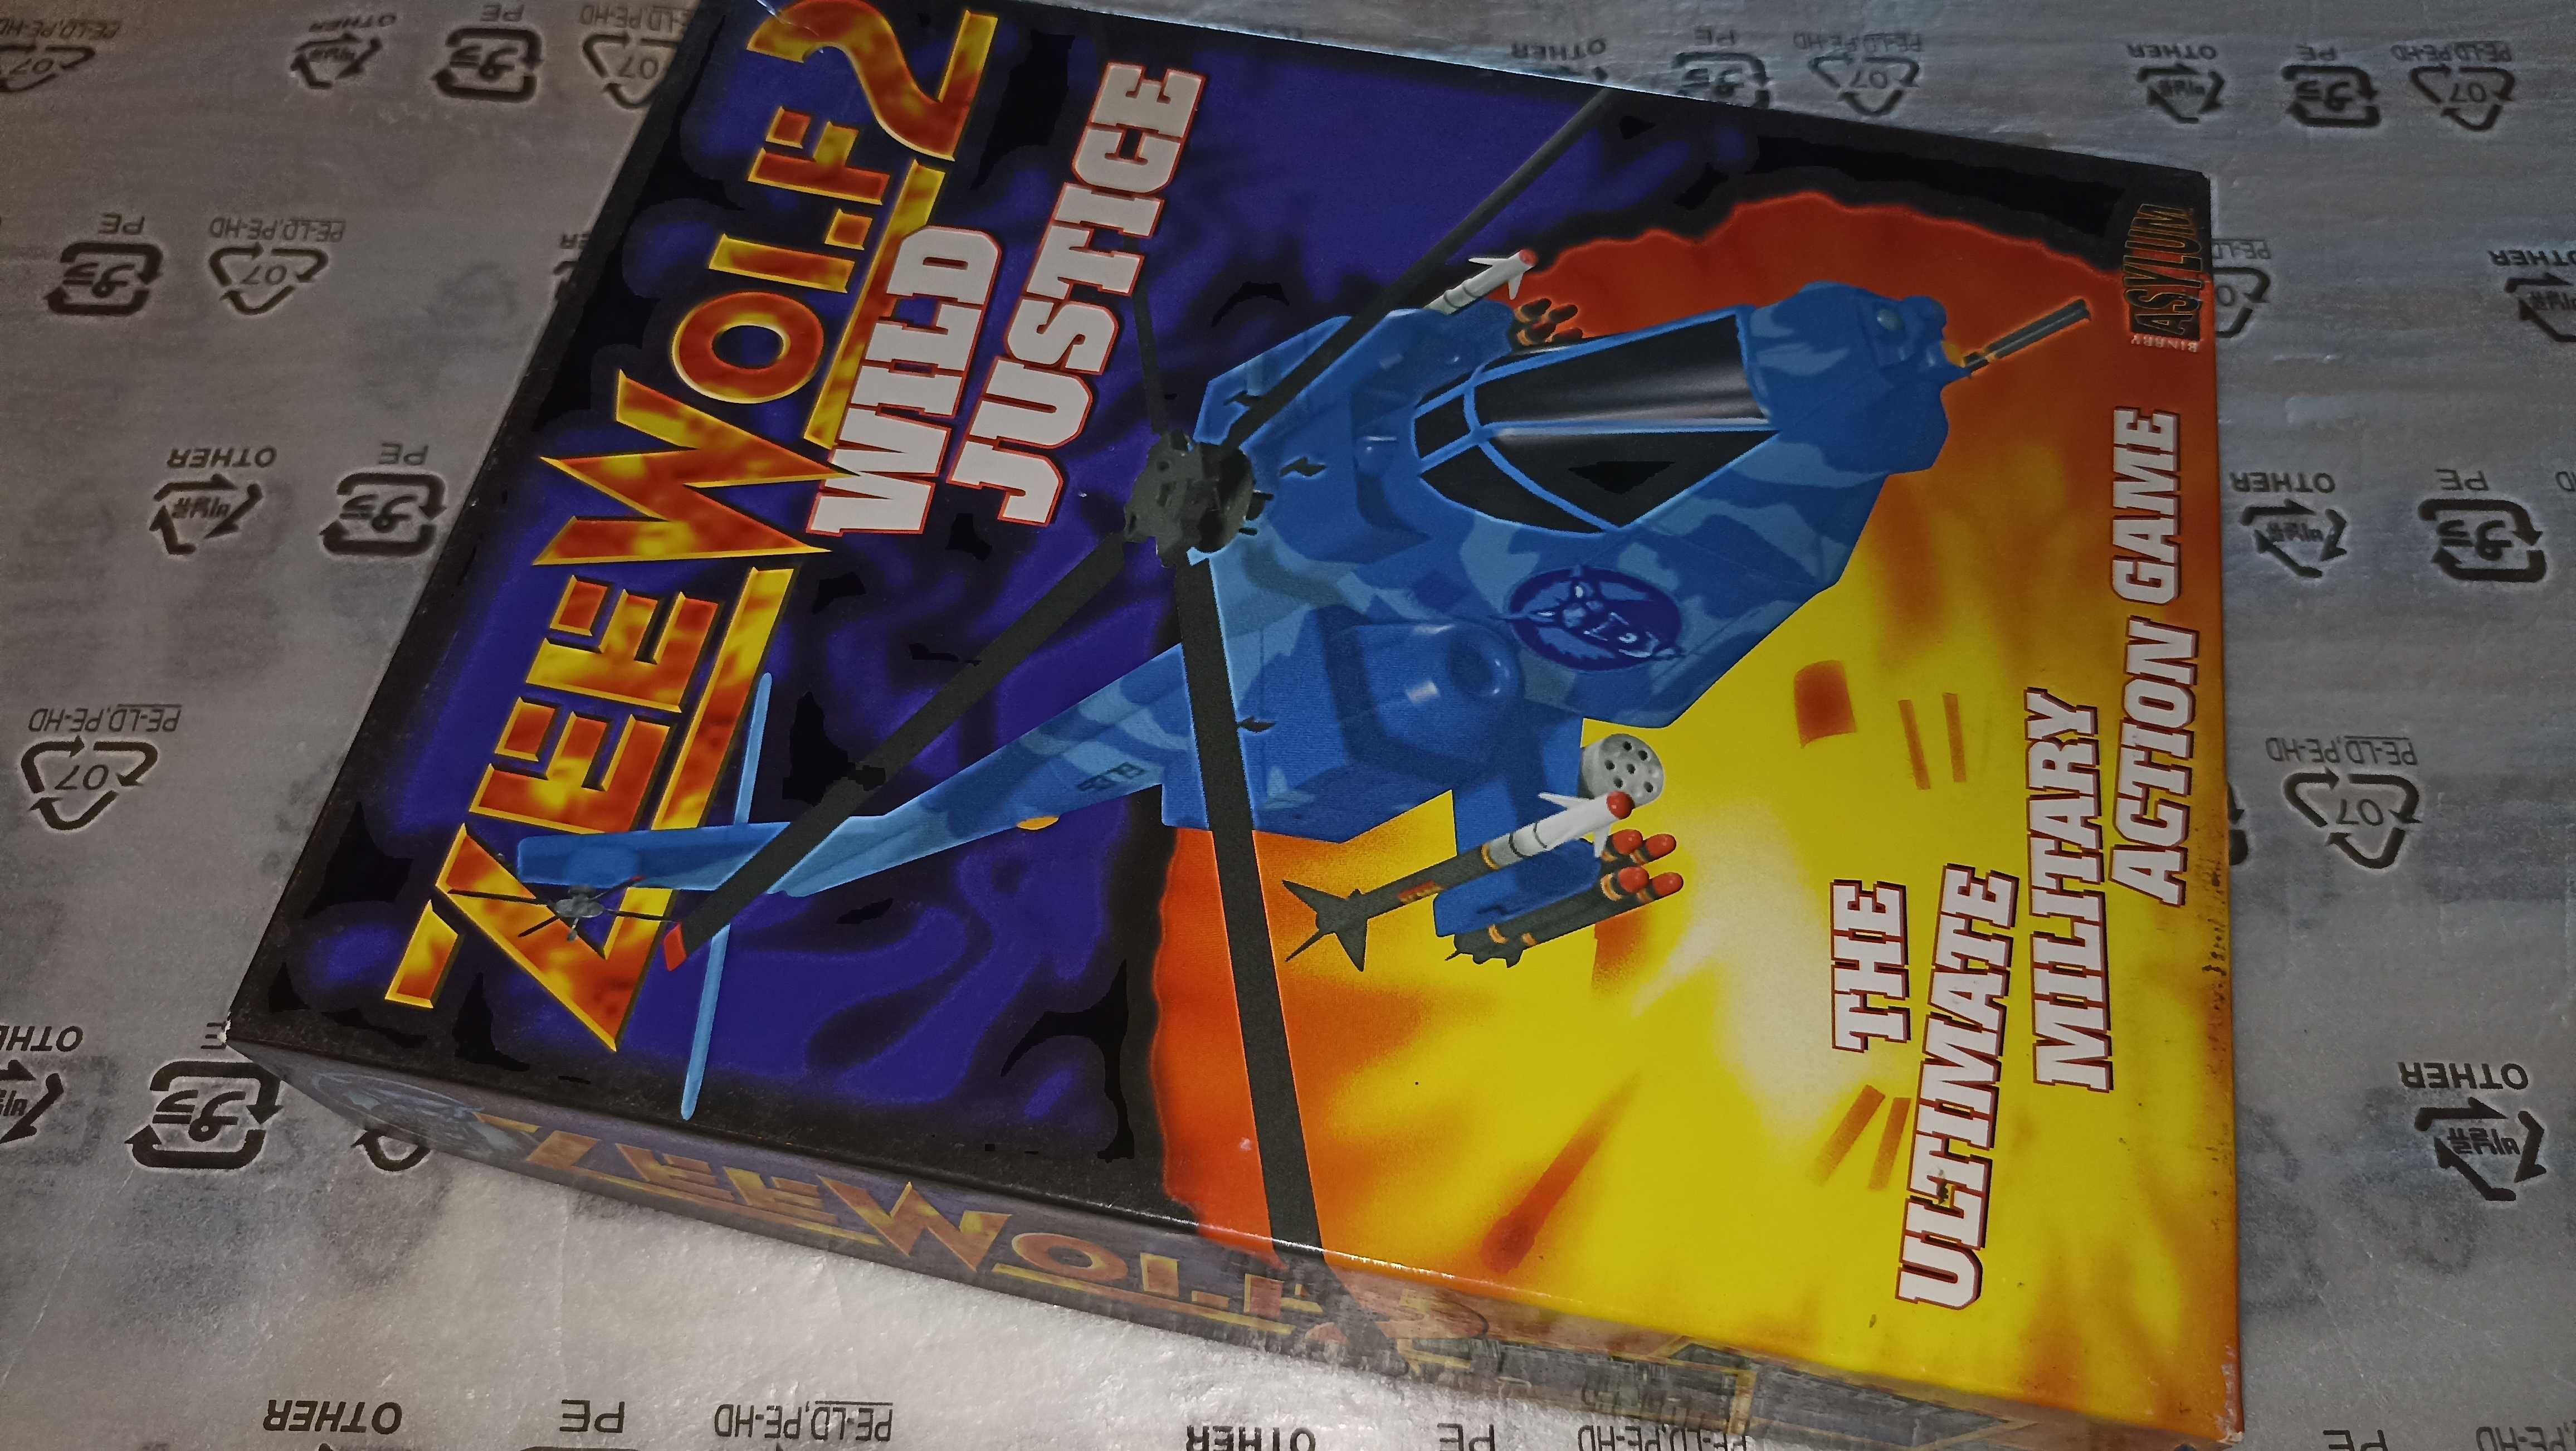 ZeeWolf 2 Zee Wolf 2 Amiga gra